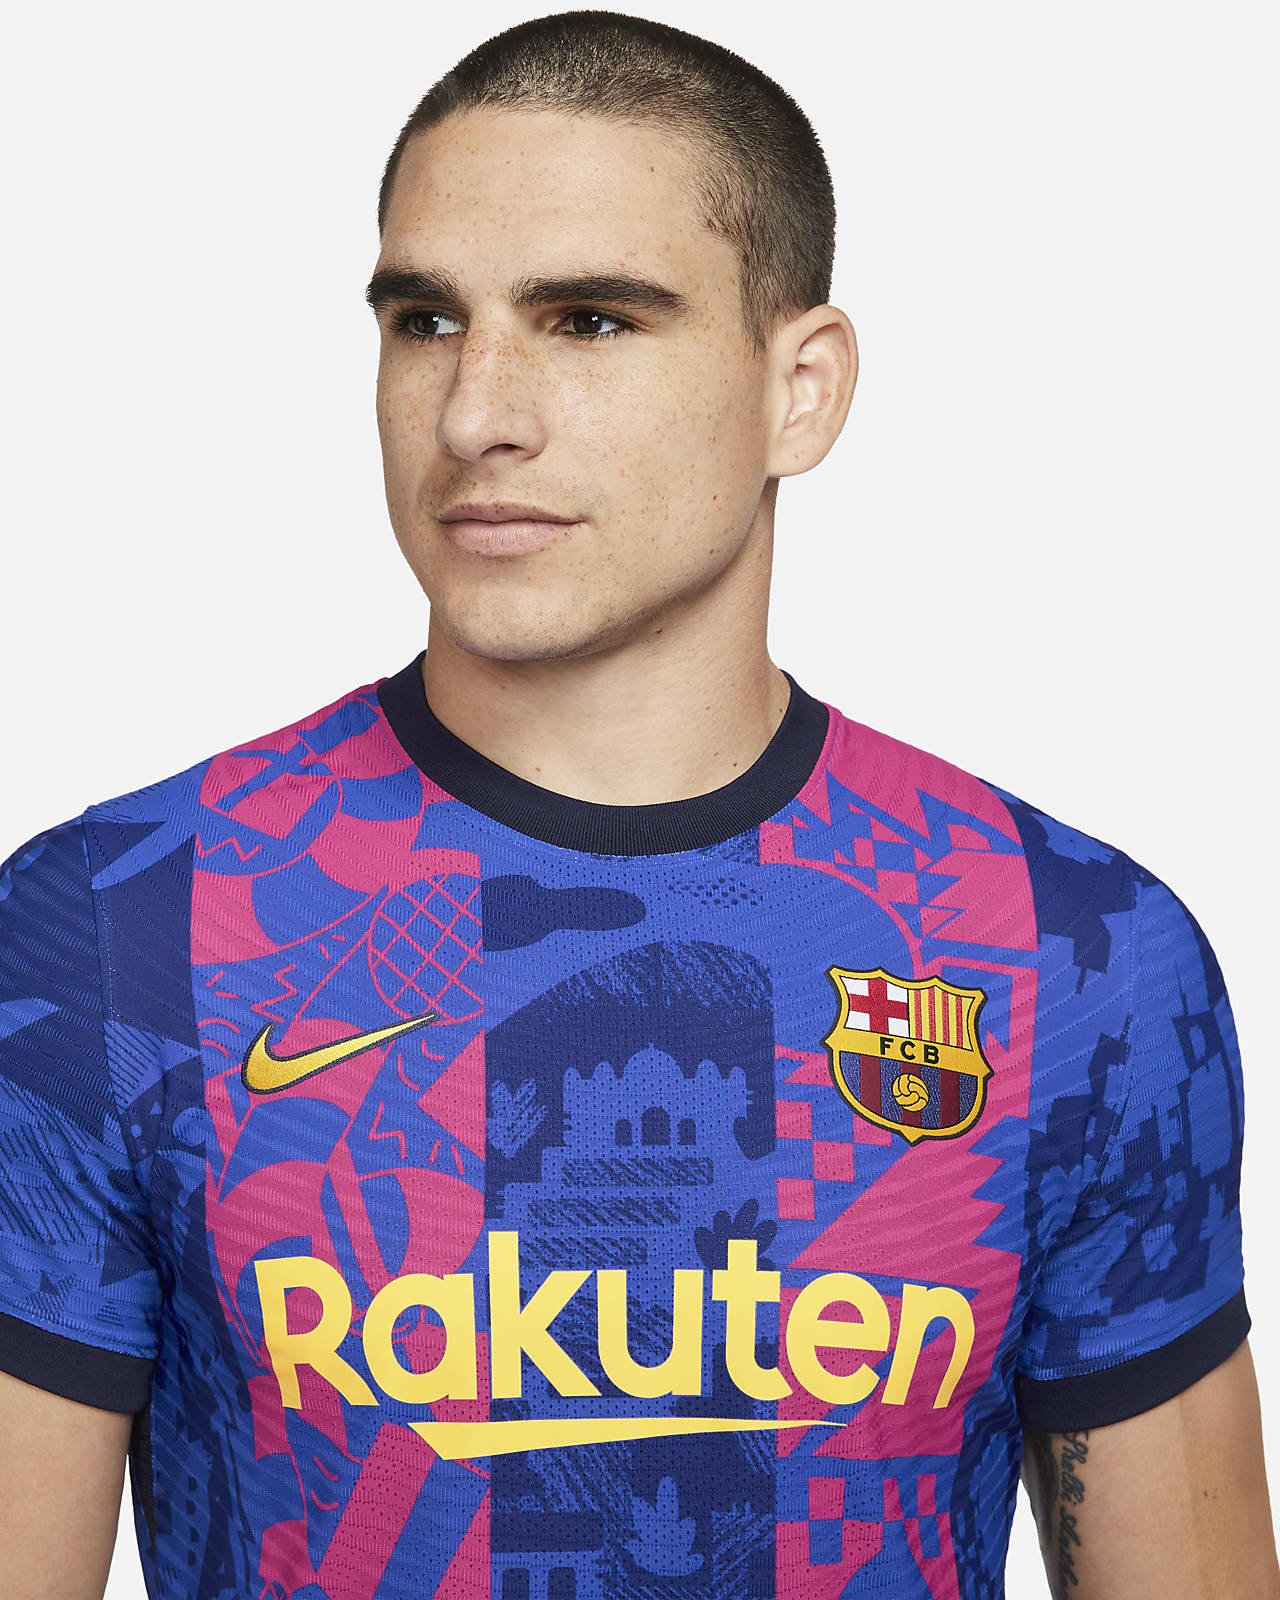 سكر بودرة للحلويات FC Barcelona 2021/22 Match Third Men's Nike Dri-FIT ADV Soccer Jersey سكر بودرة للحلويات